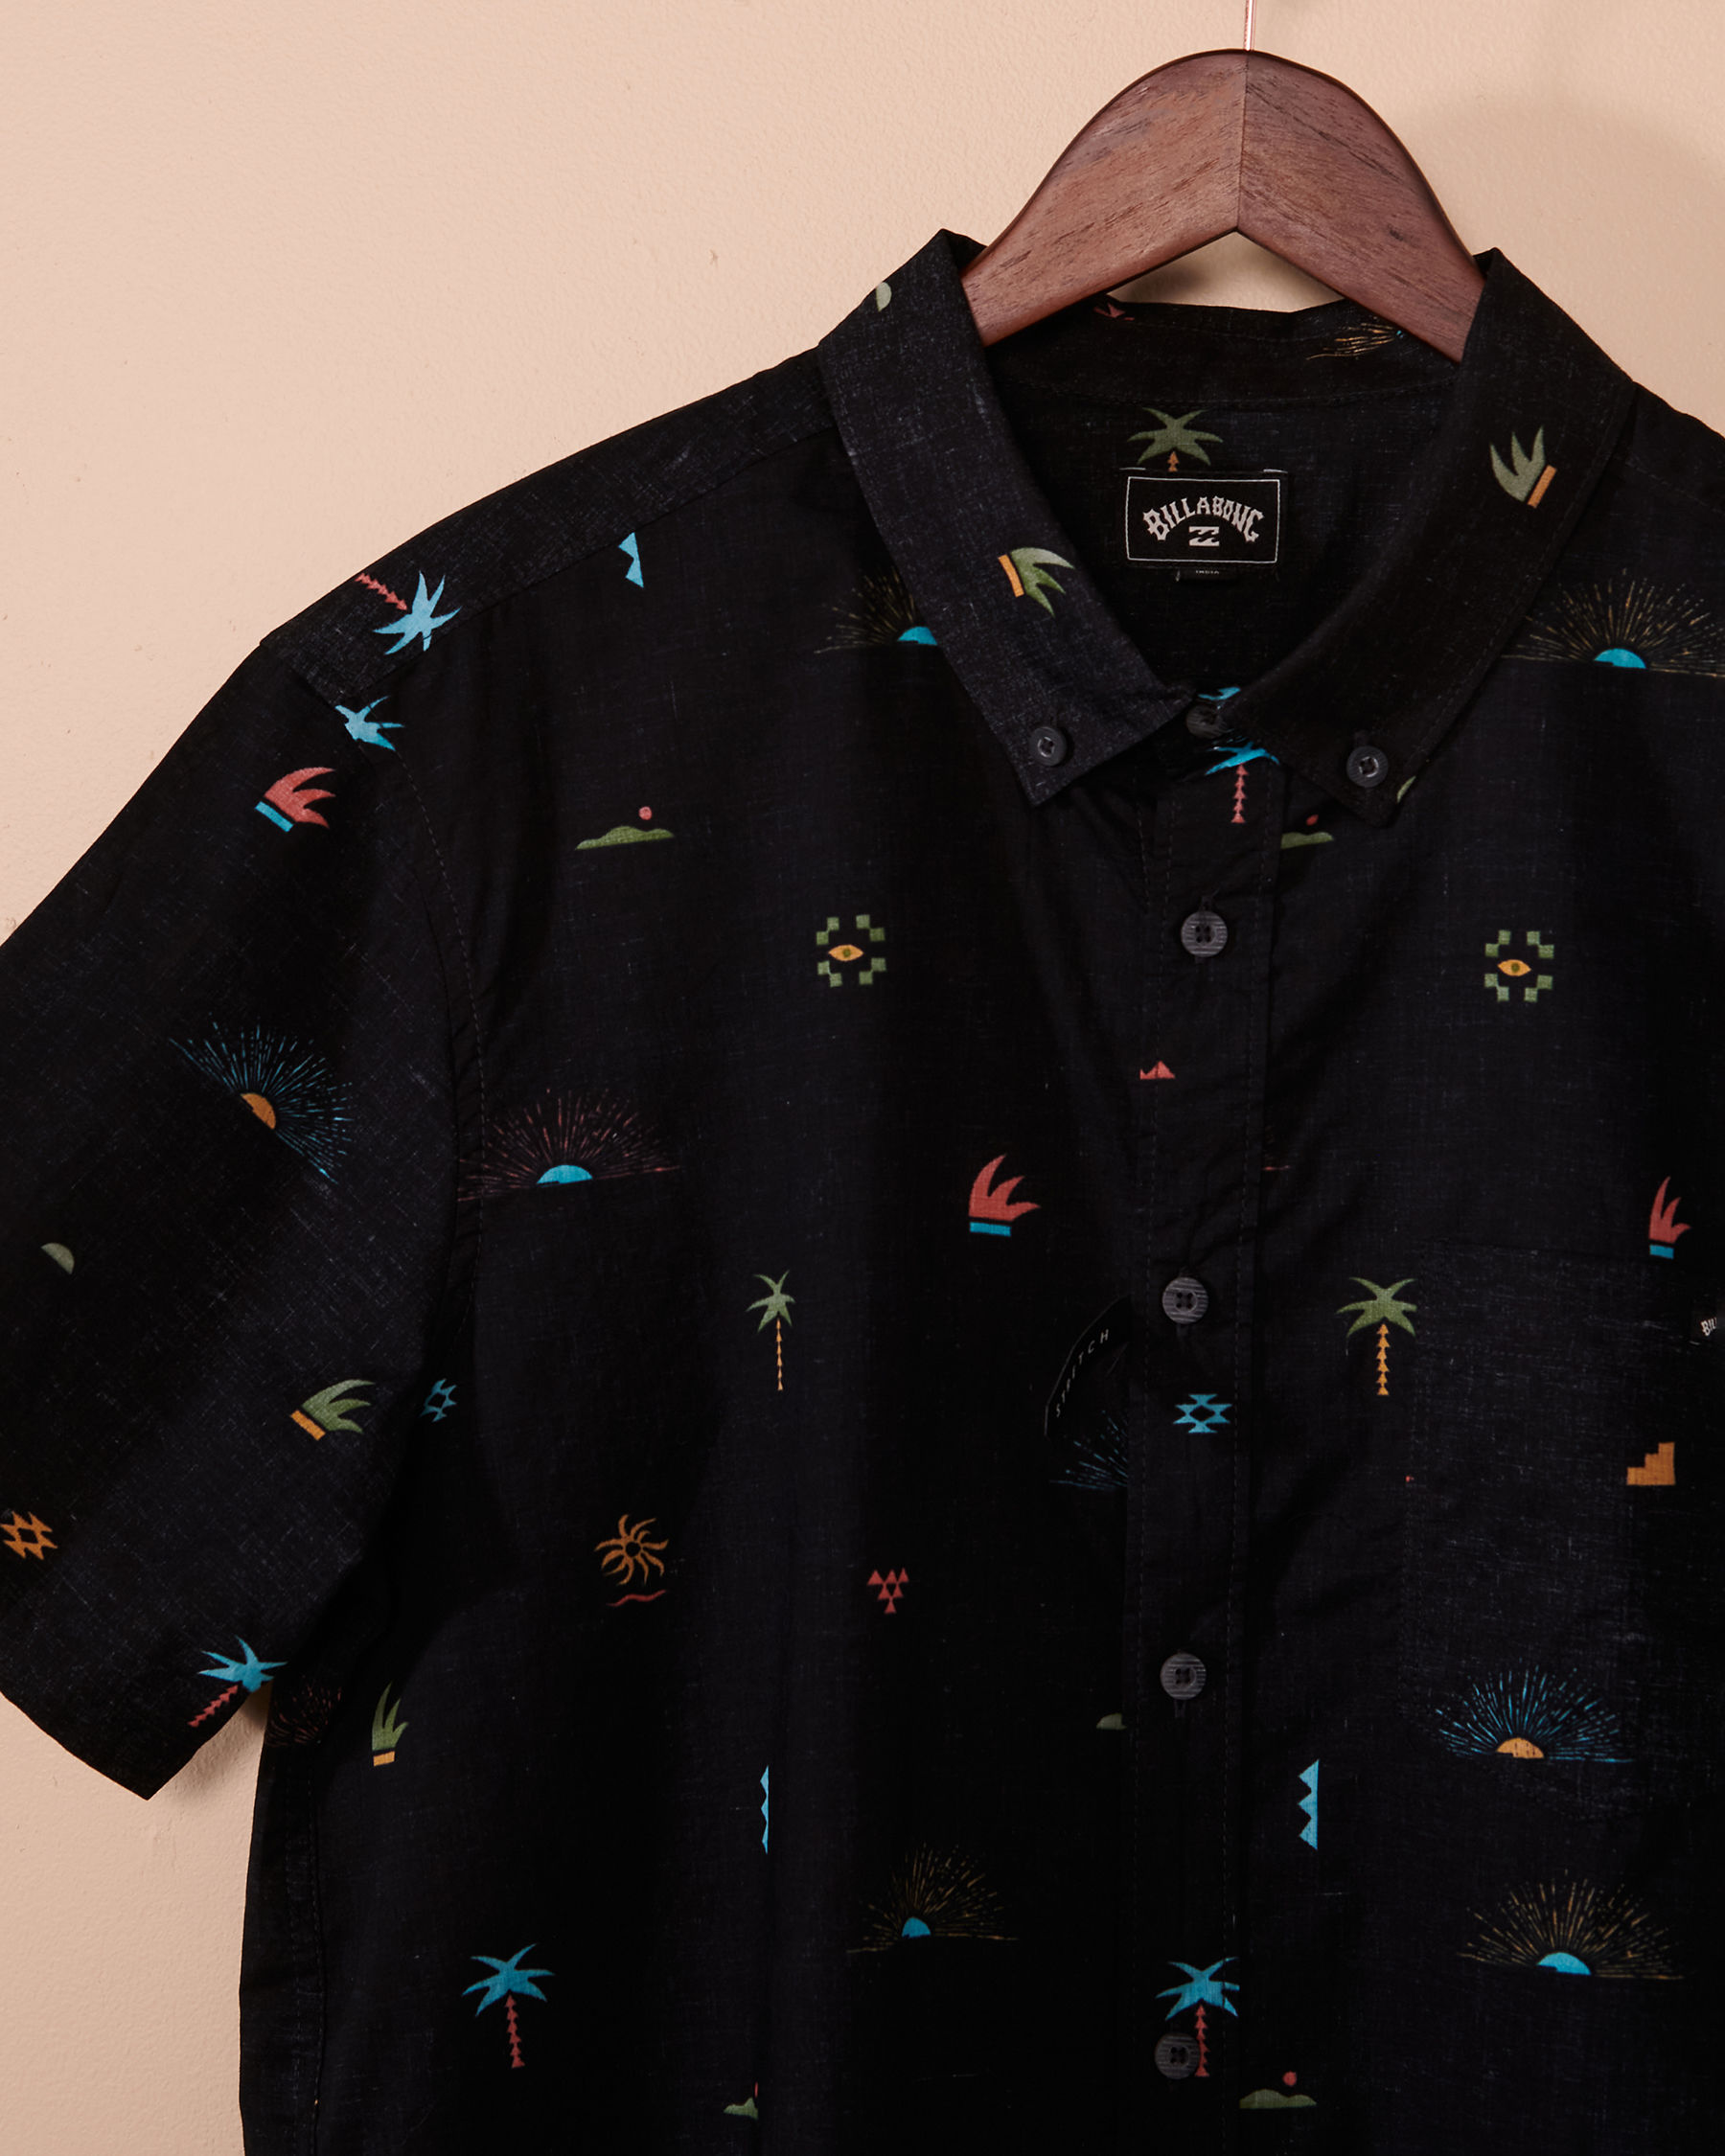 BILLABONG SUNDAYS MINI Short Sleeves Shirt Black print M5033BSM - View4